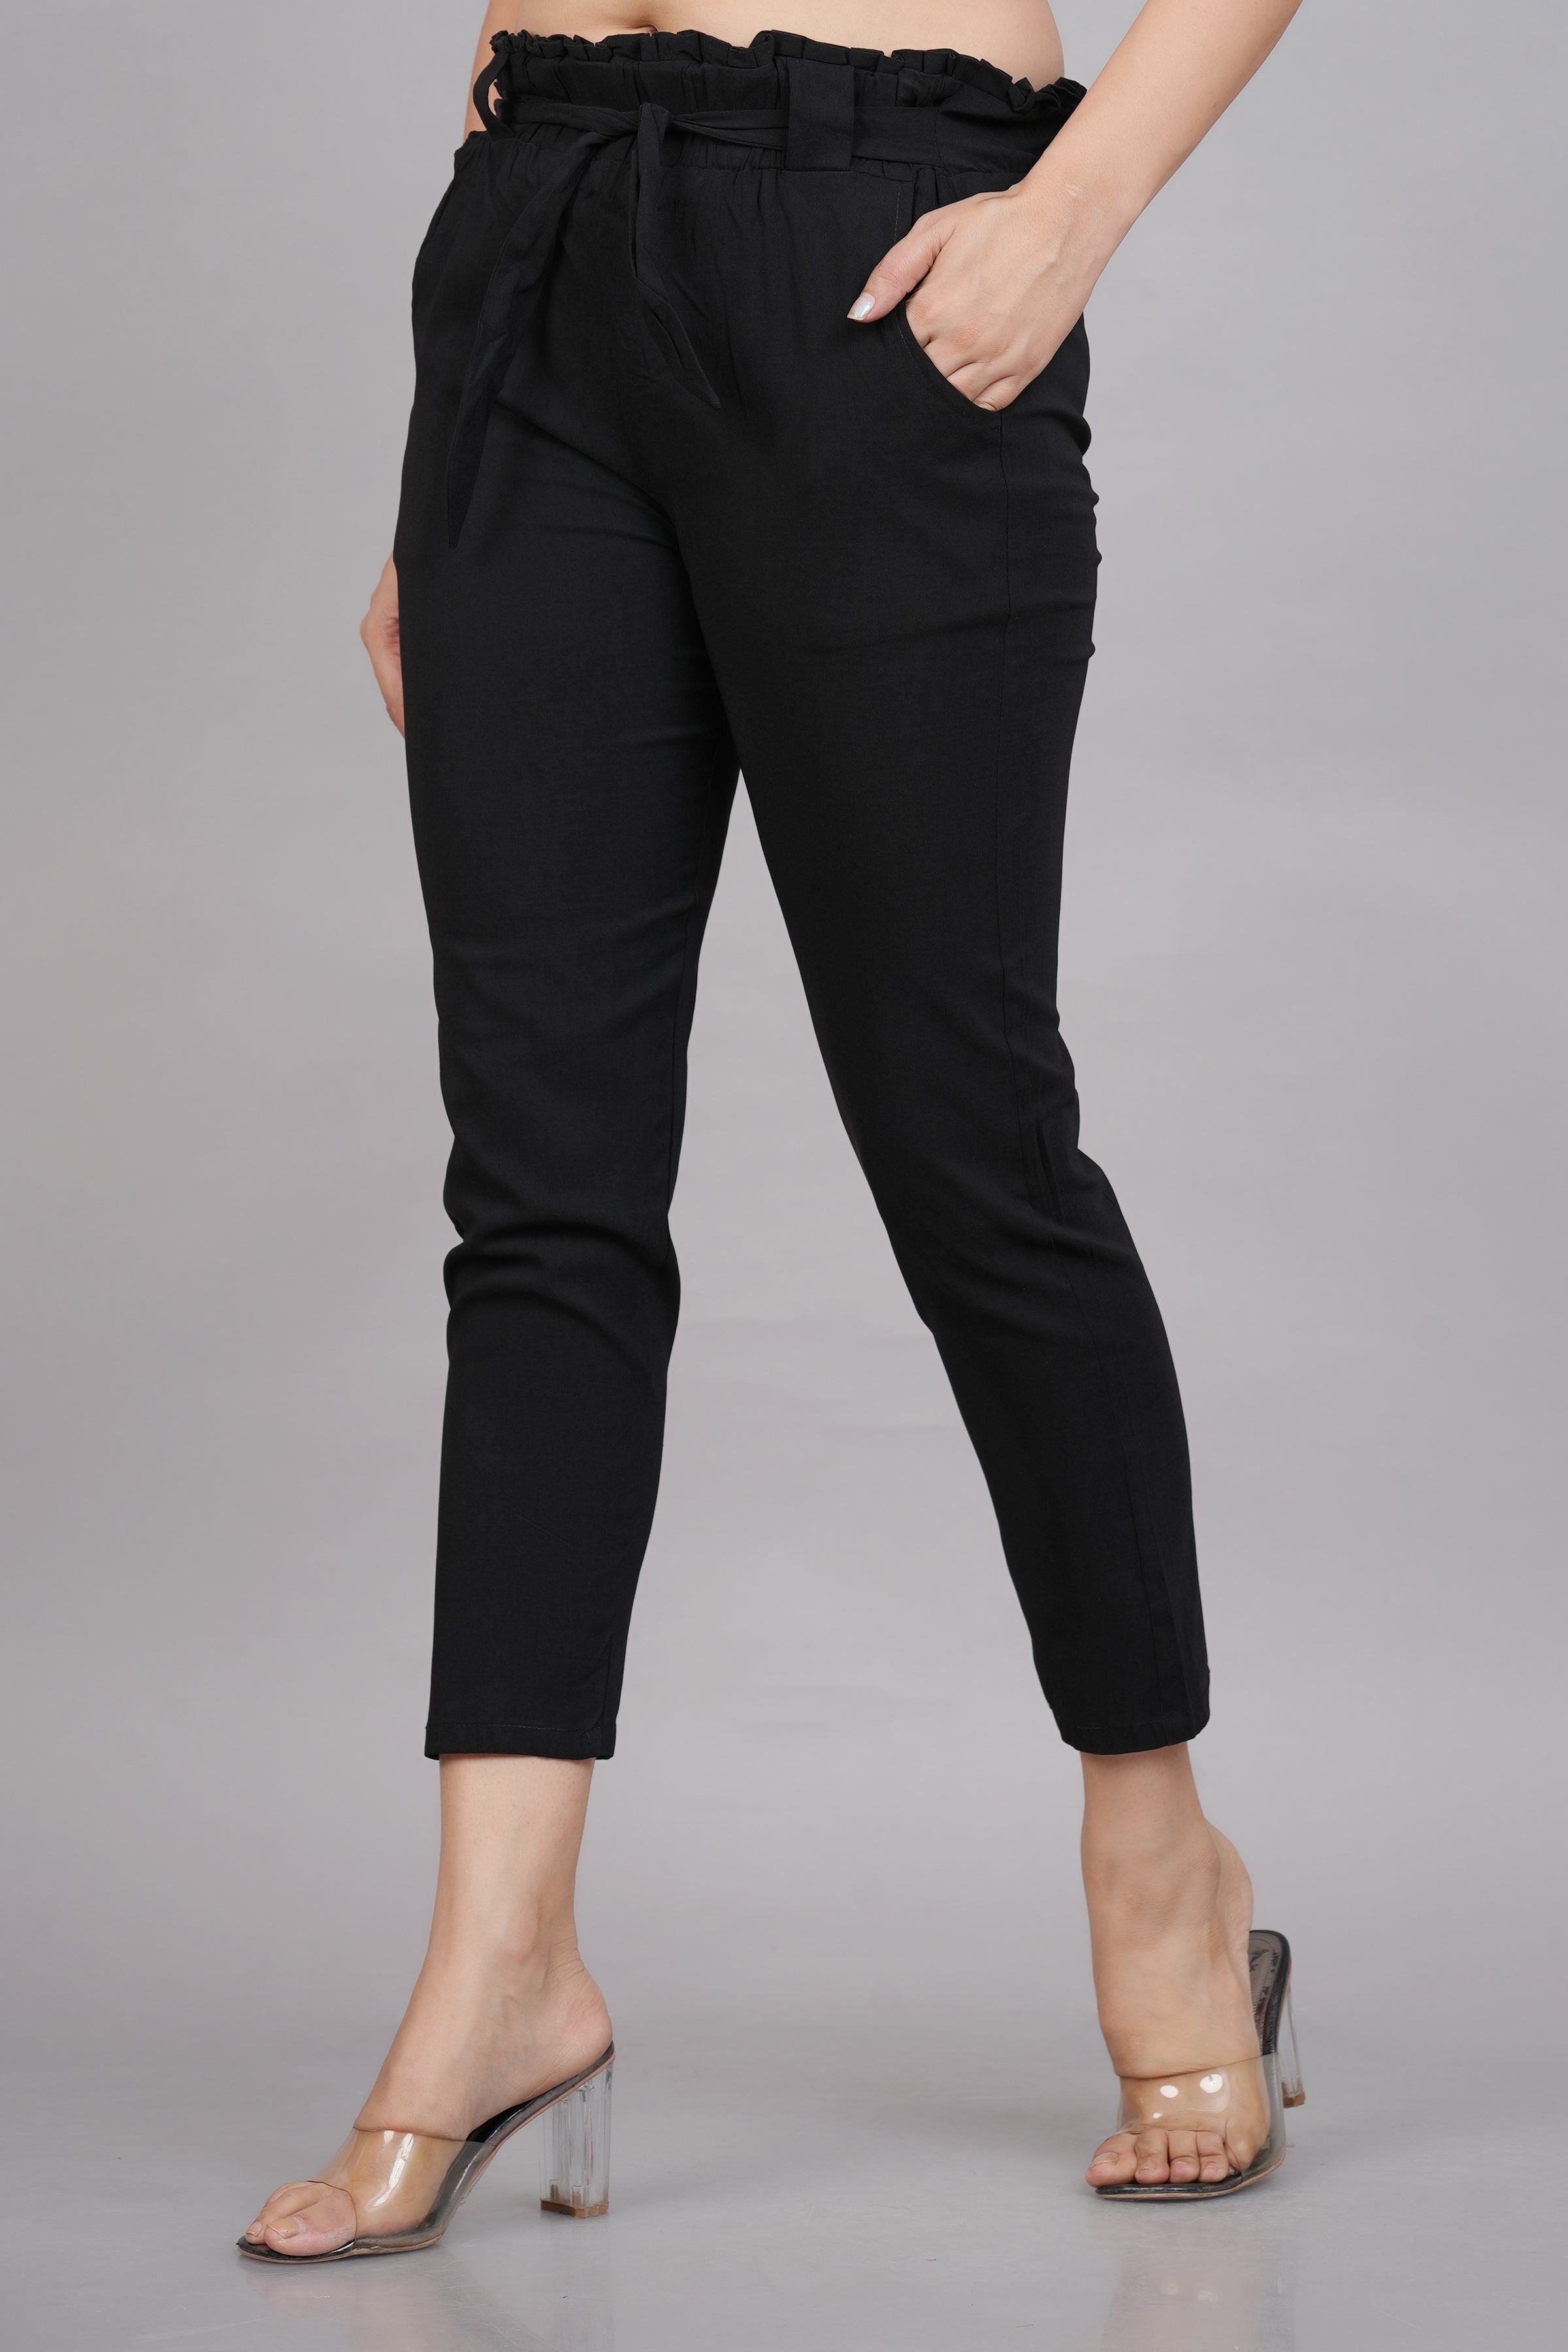 YYDGH Women Slacks Pants for Work Pressional Pull On Mid Waisted Full  Length Slim Fit Trousers Regular Dress Pants Navy Blue S - Walmart.com